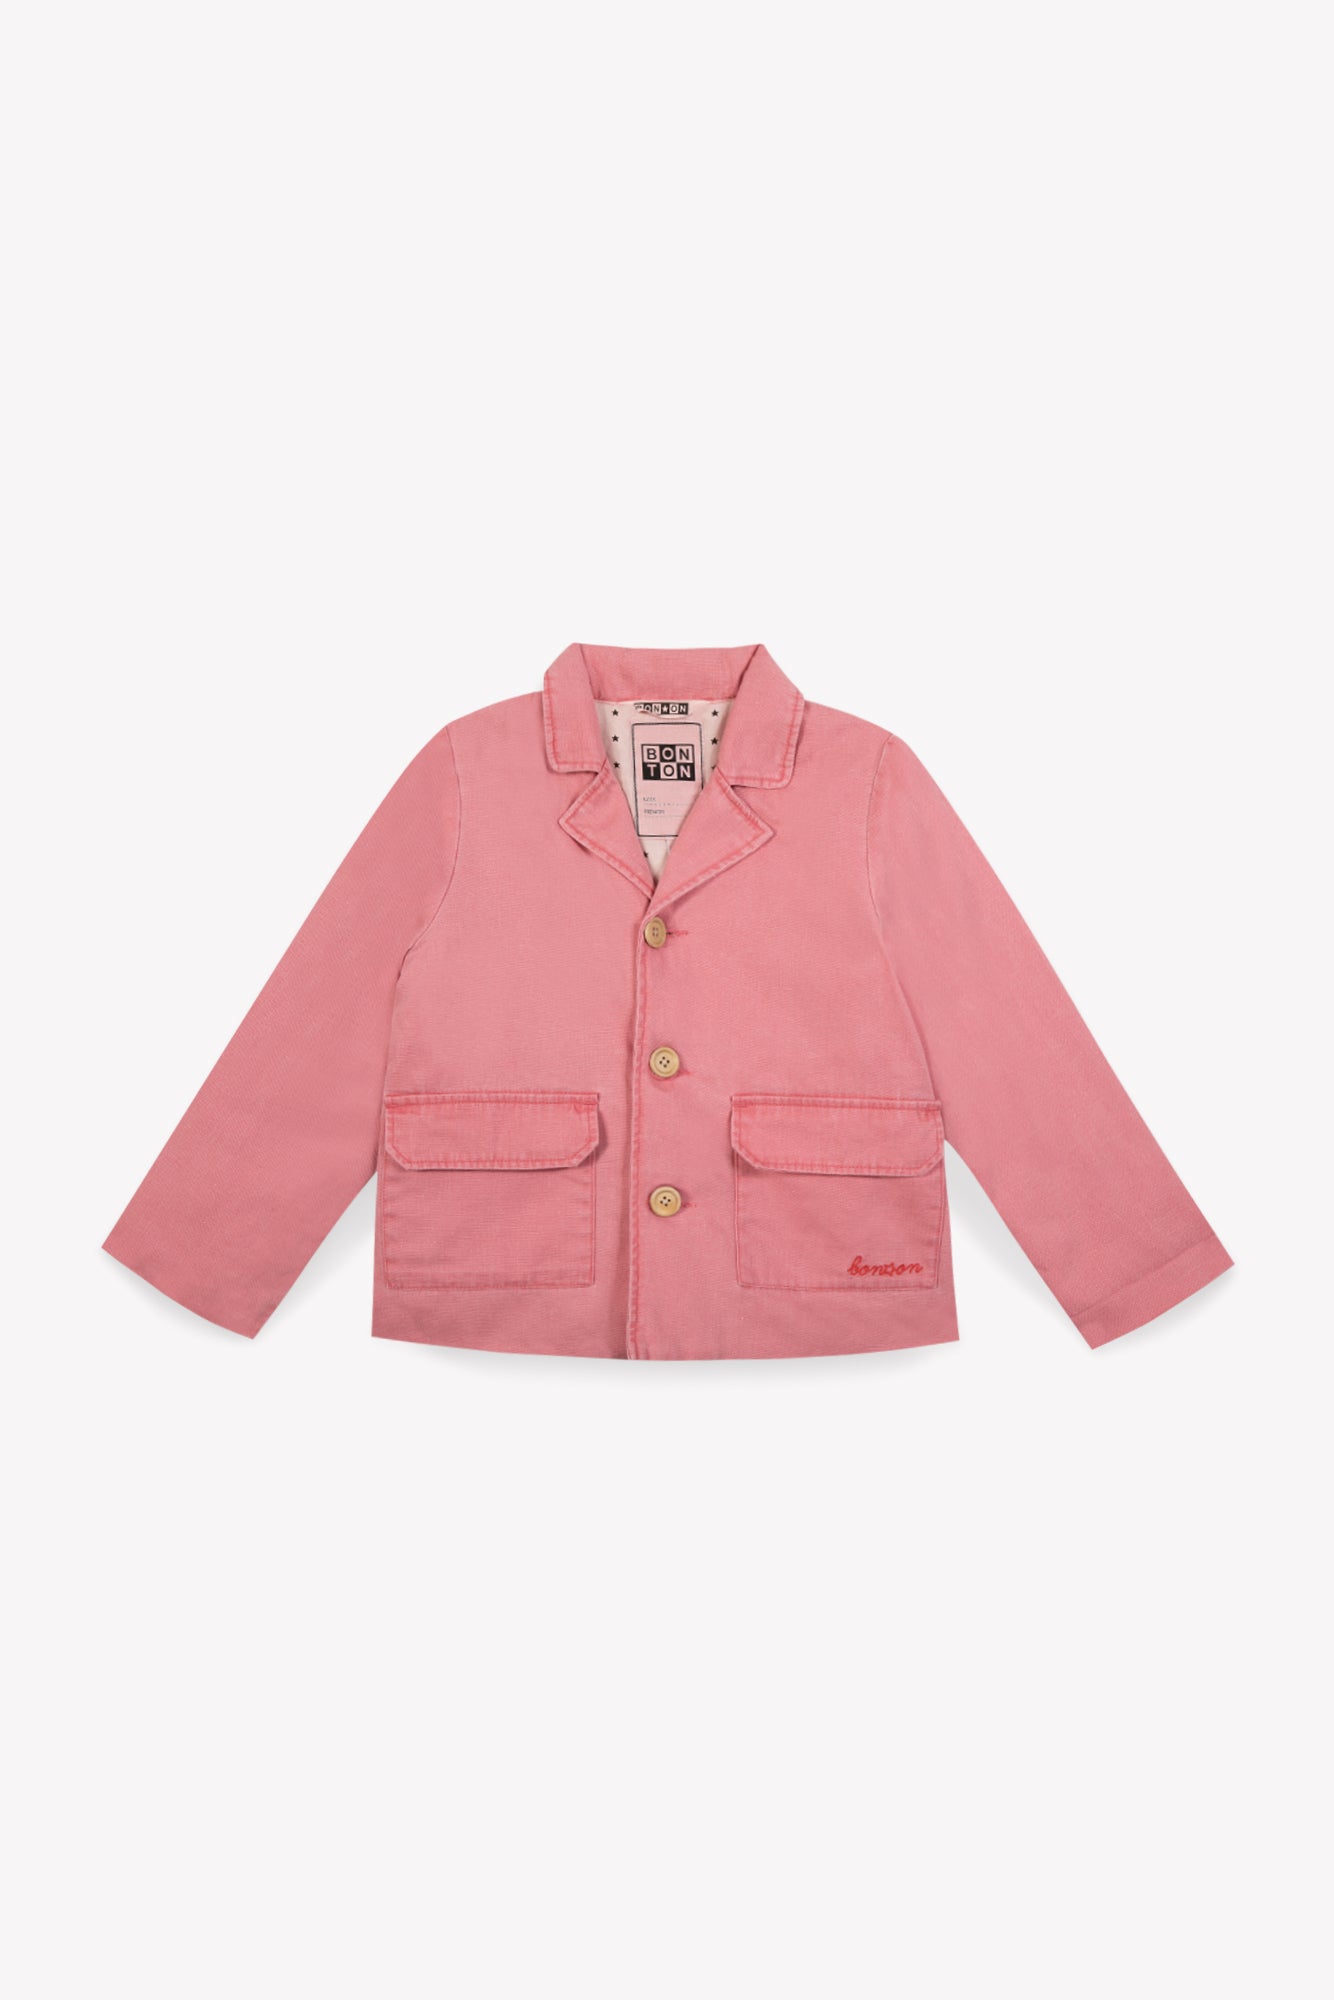 Jacket - Ranger Pink Cotton canvas and KR linen